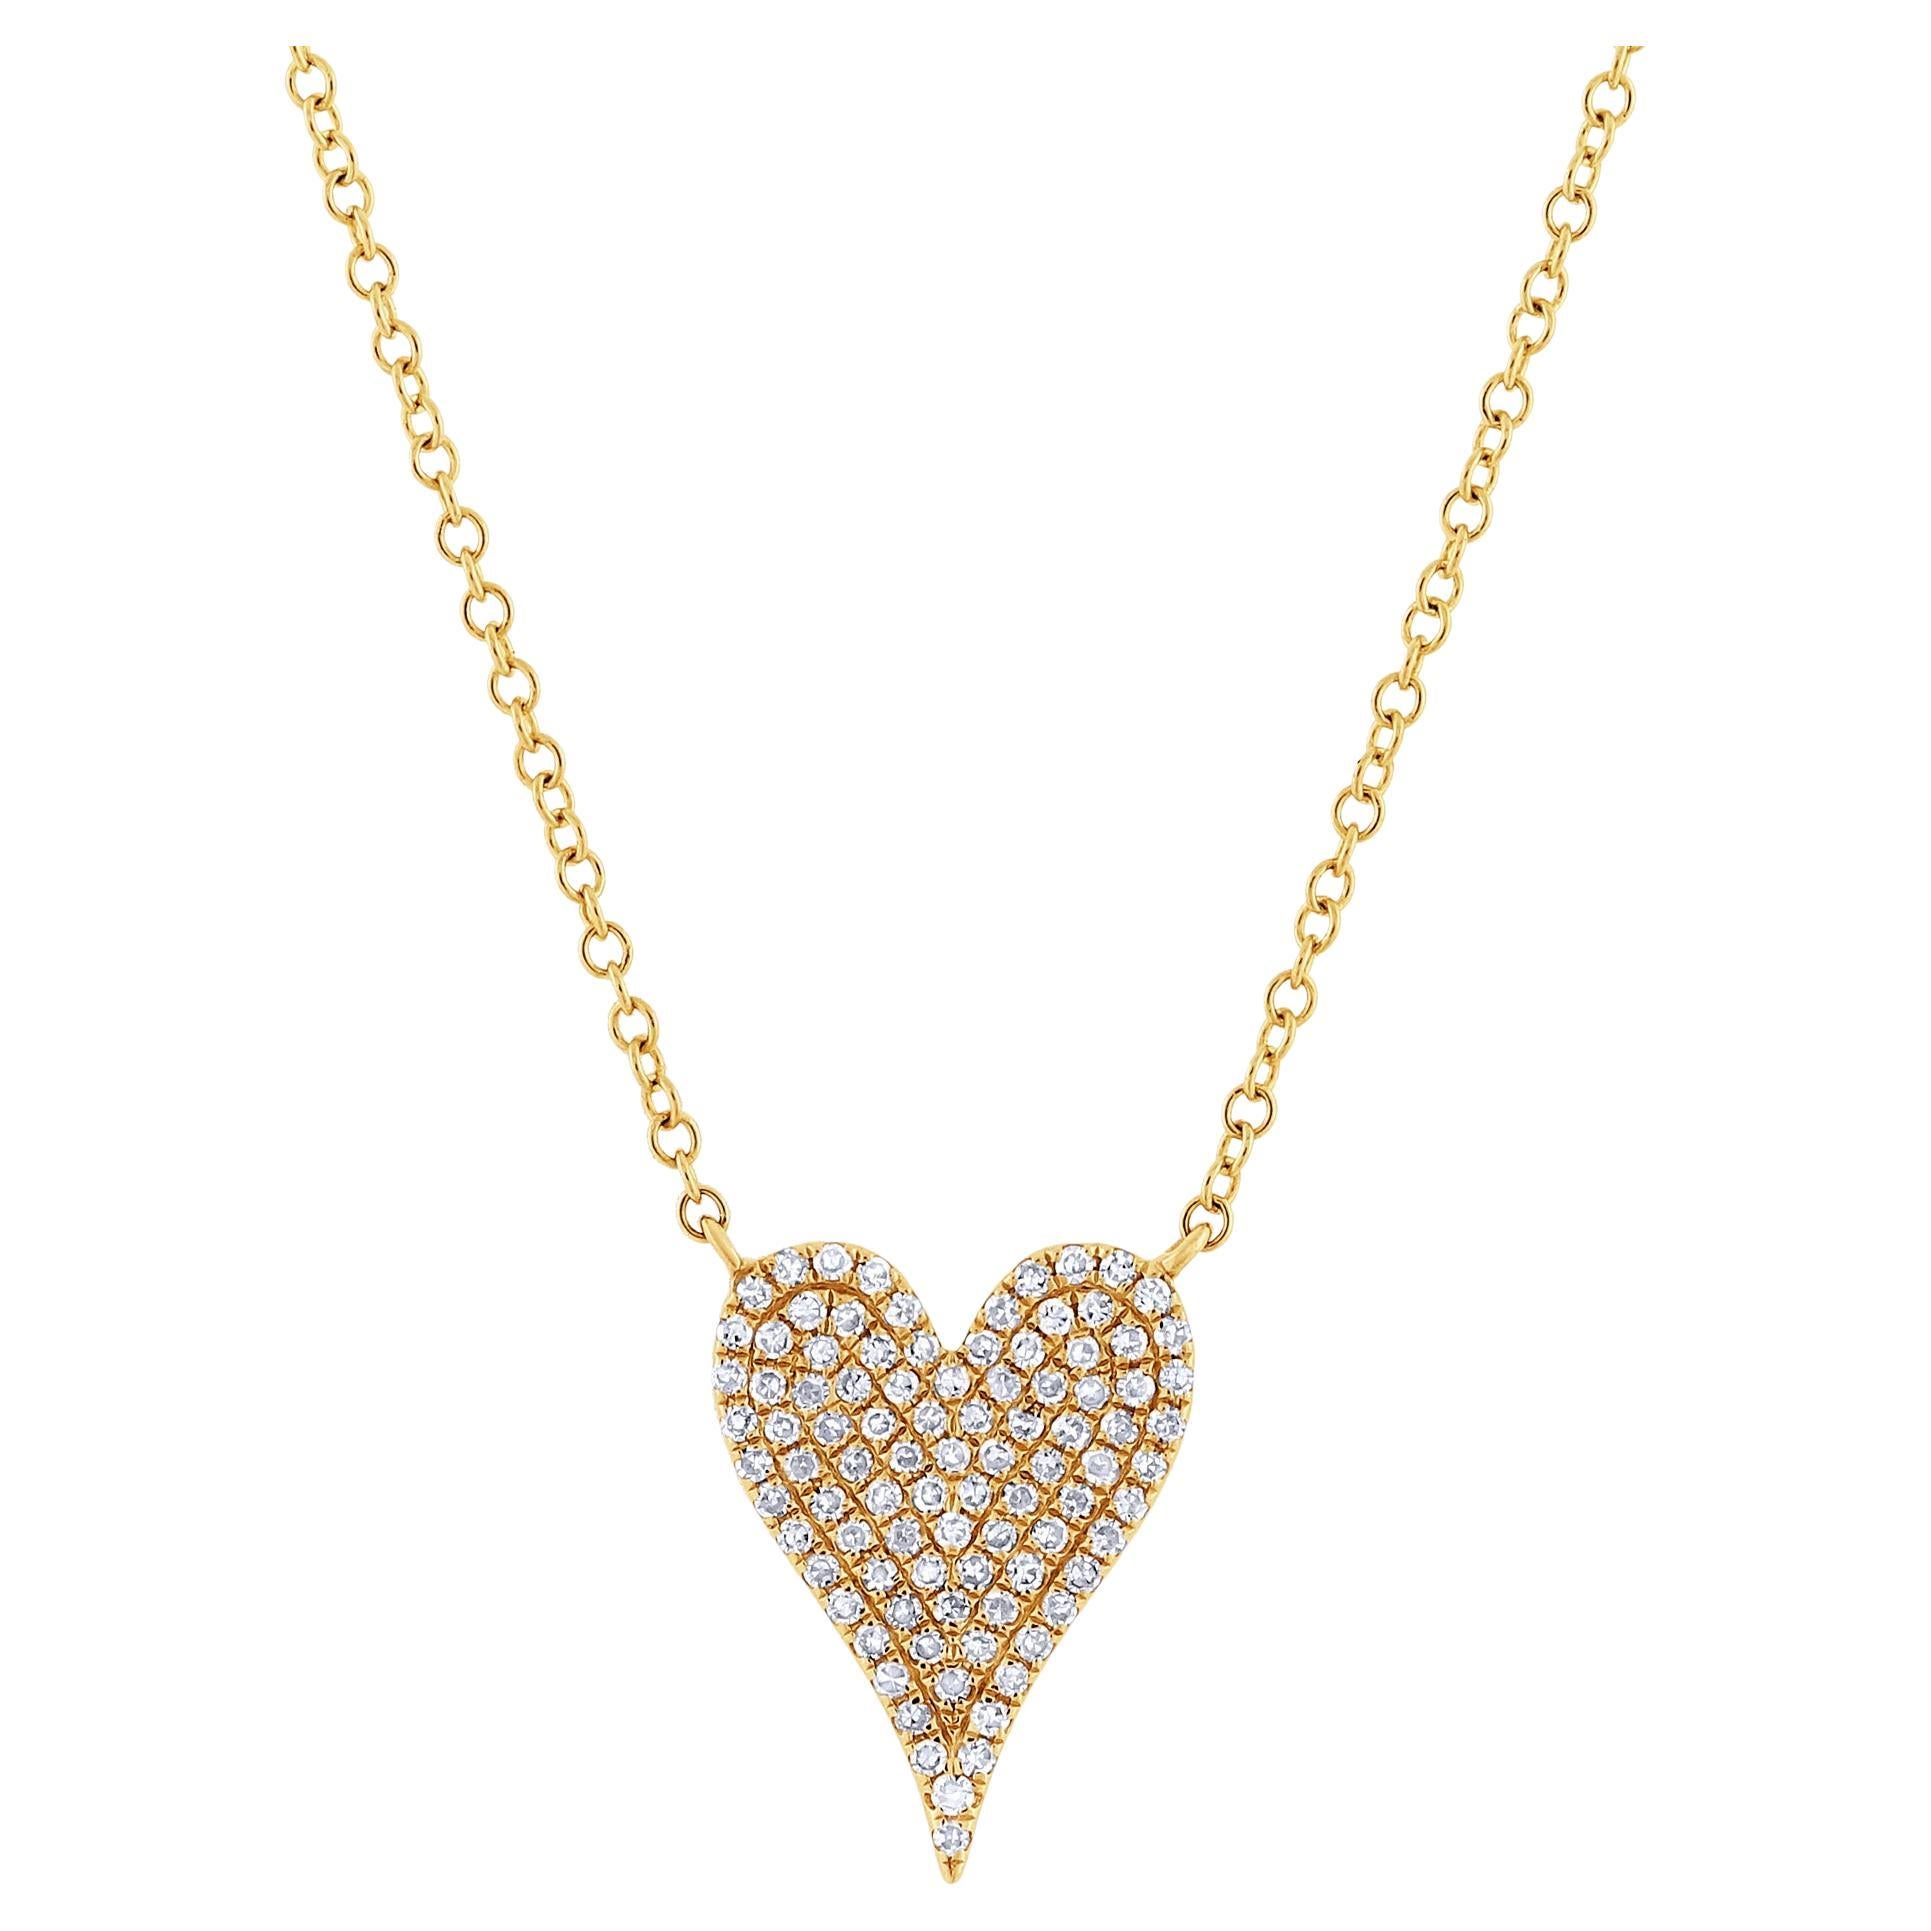 Rachel Koen Pave Diamond Heart Pendant Necklace 14K Yellow Gold 0.21cttw